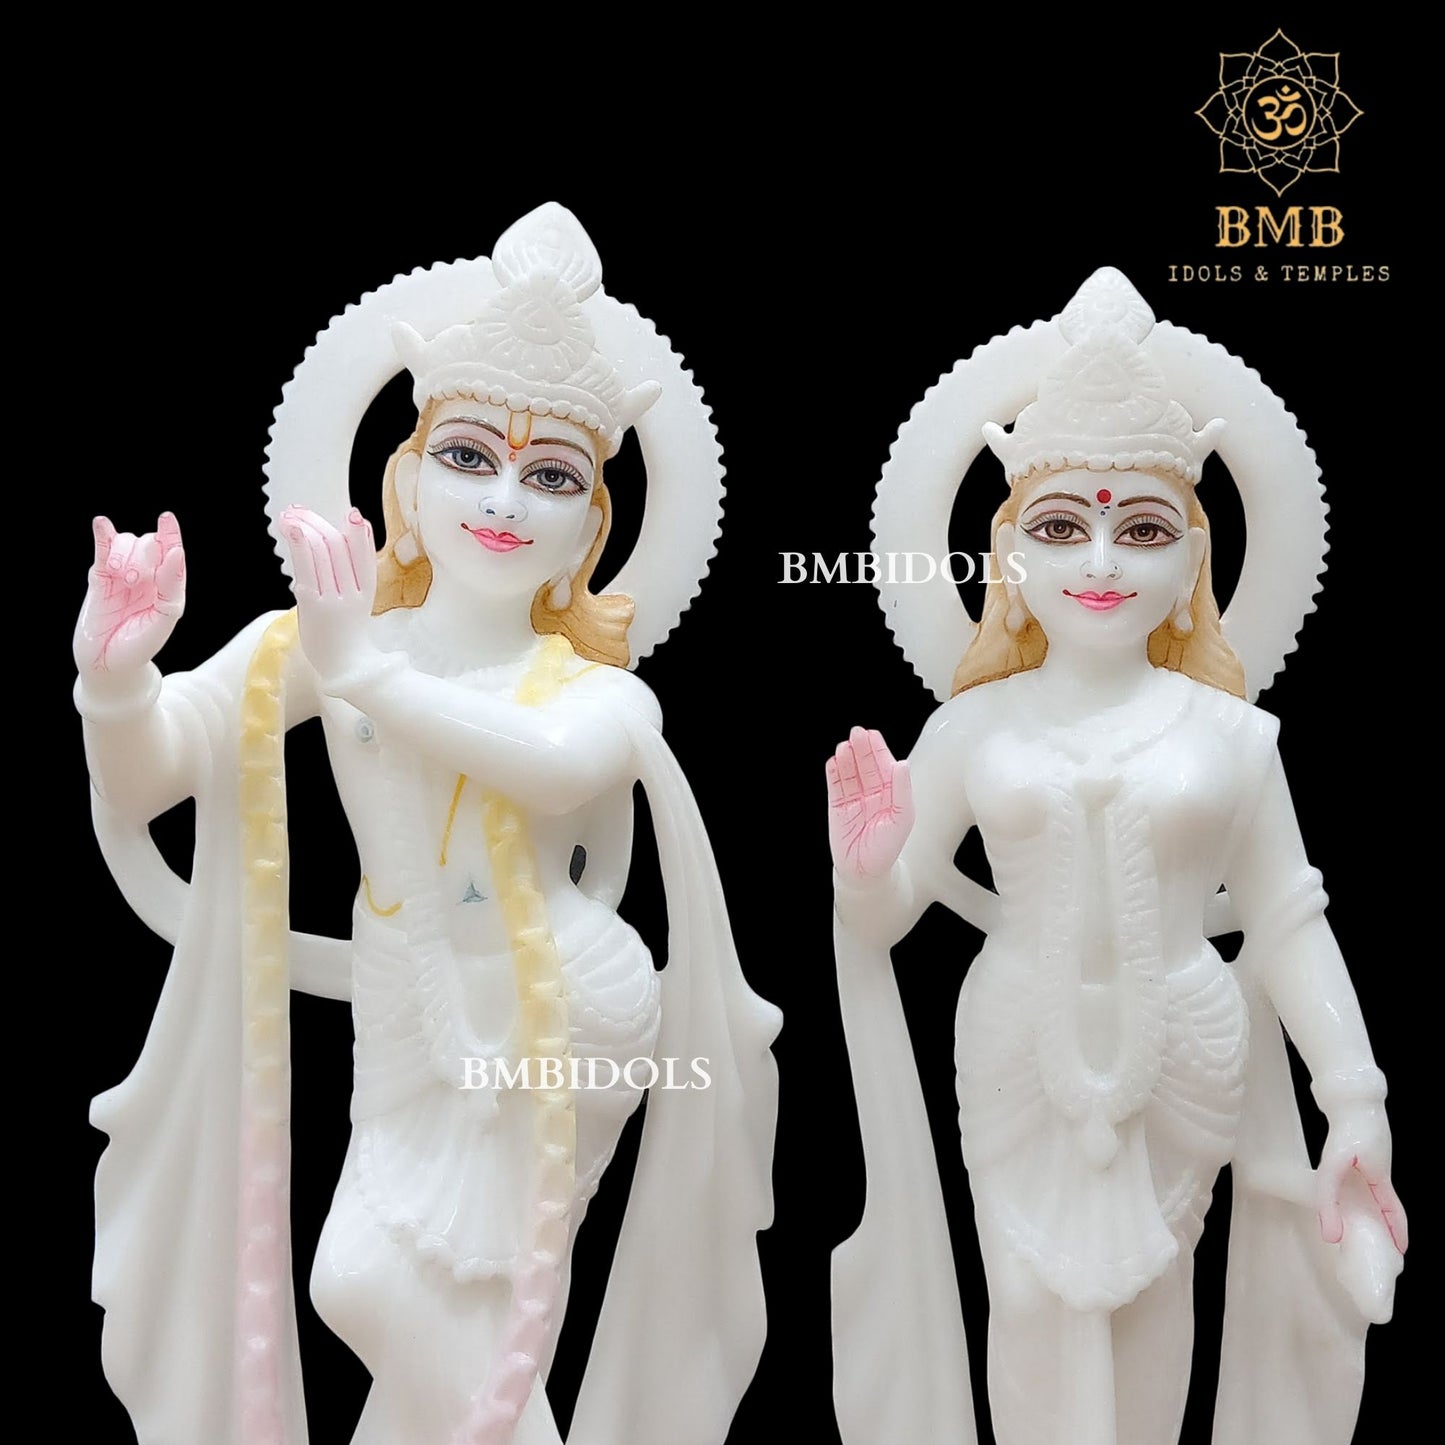 Makrana Marble Radha Krishna Statue in Full Whiteness in 15inch